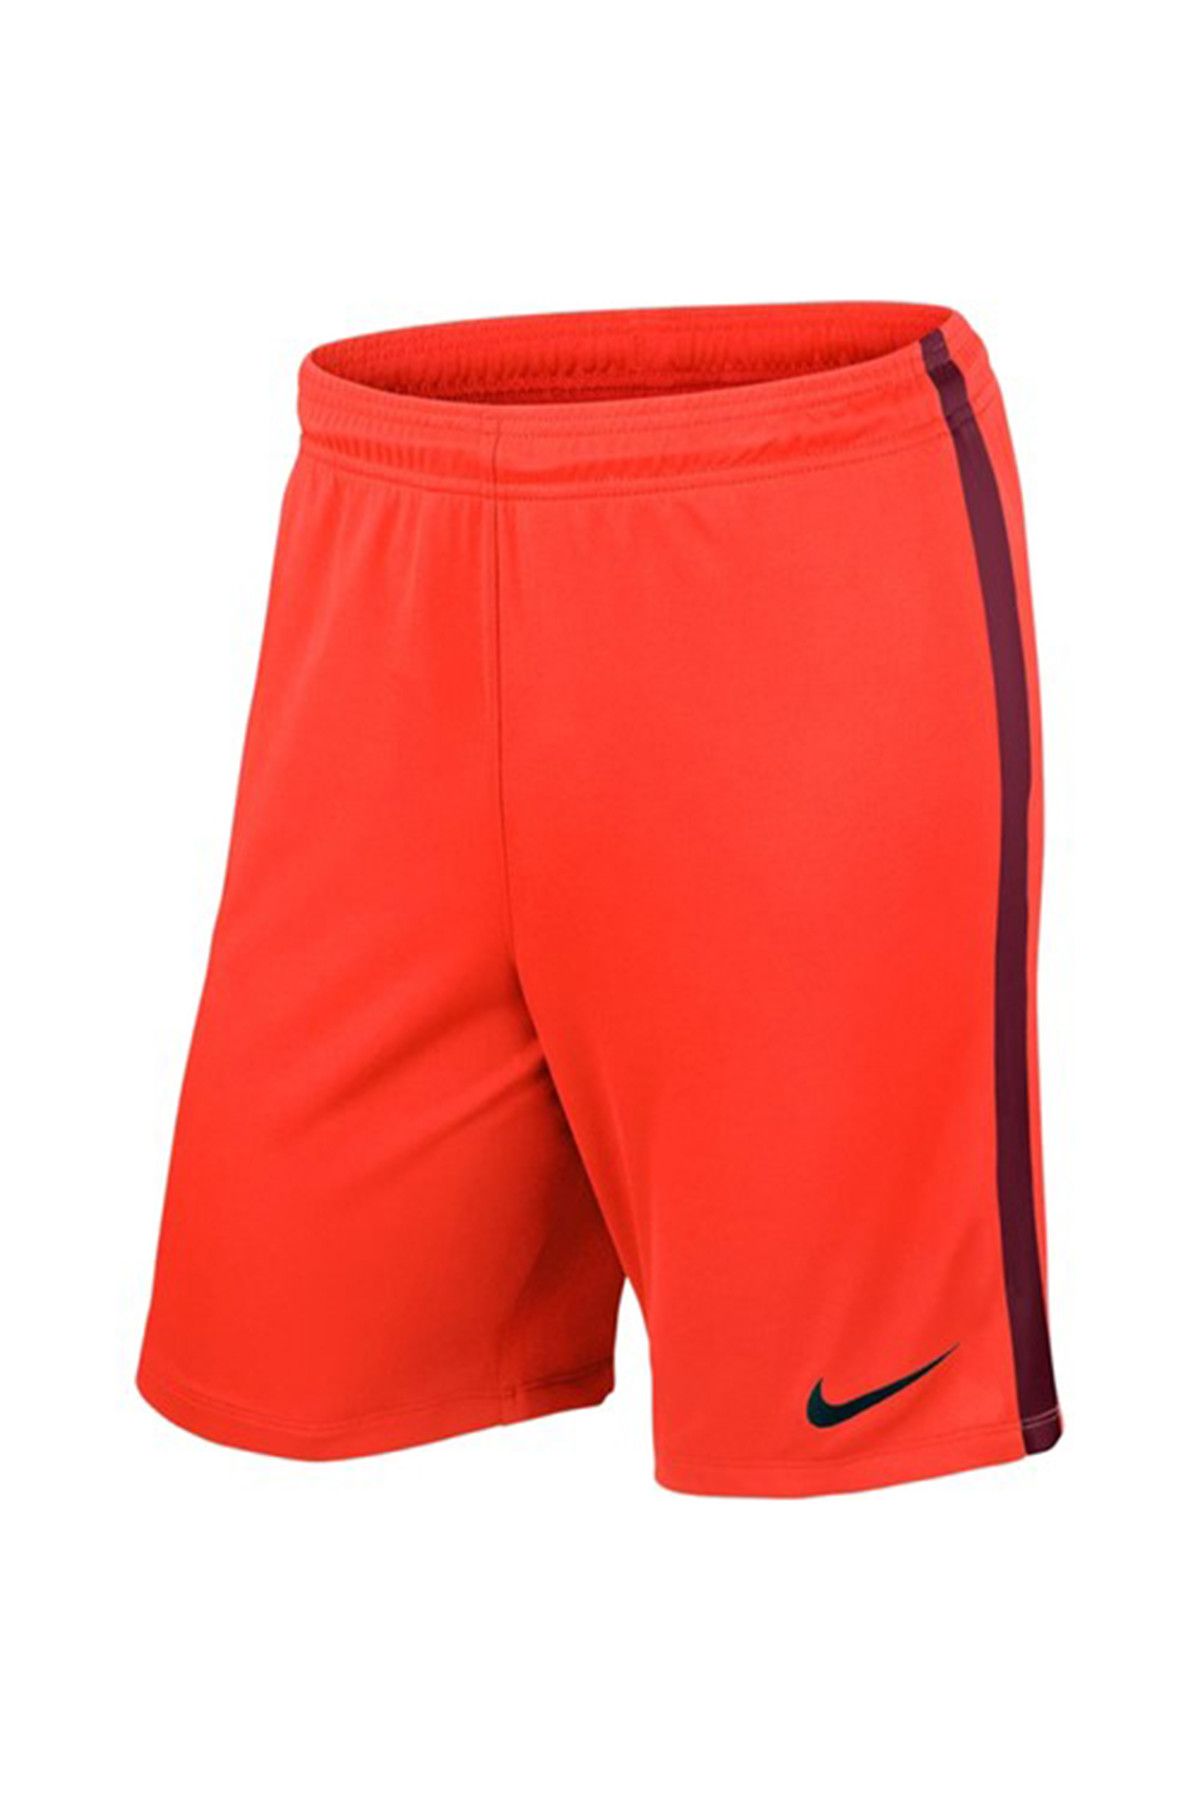 Nike Erkek Şort - League Knit Short Nb - 725881-671